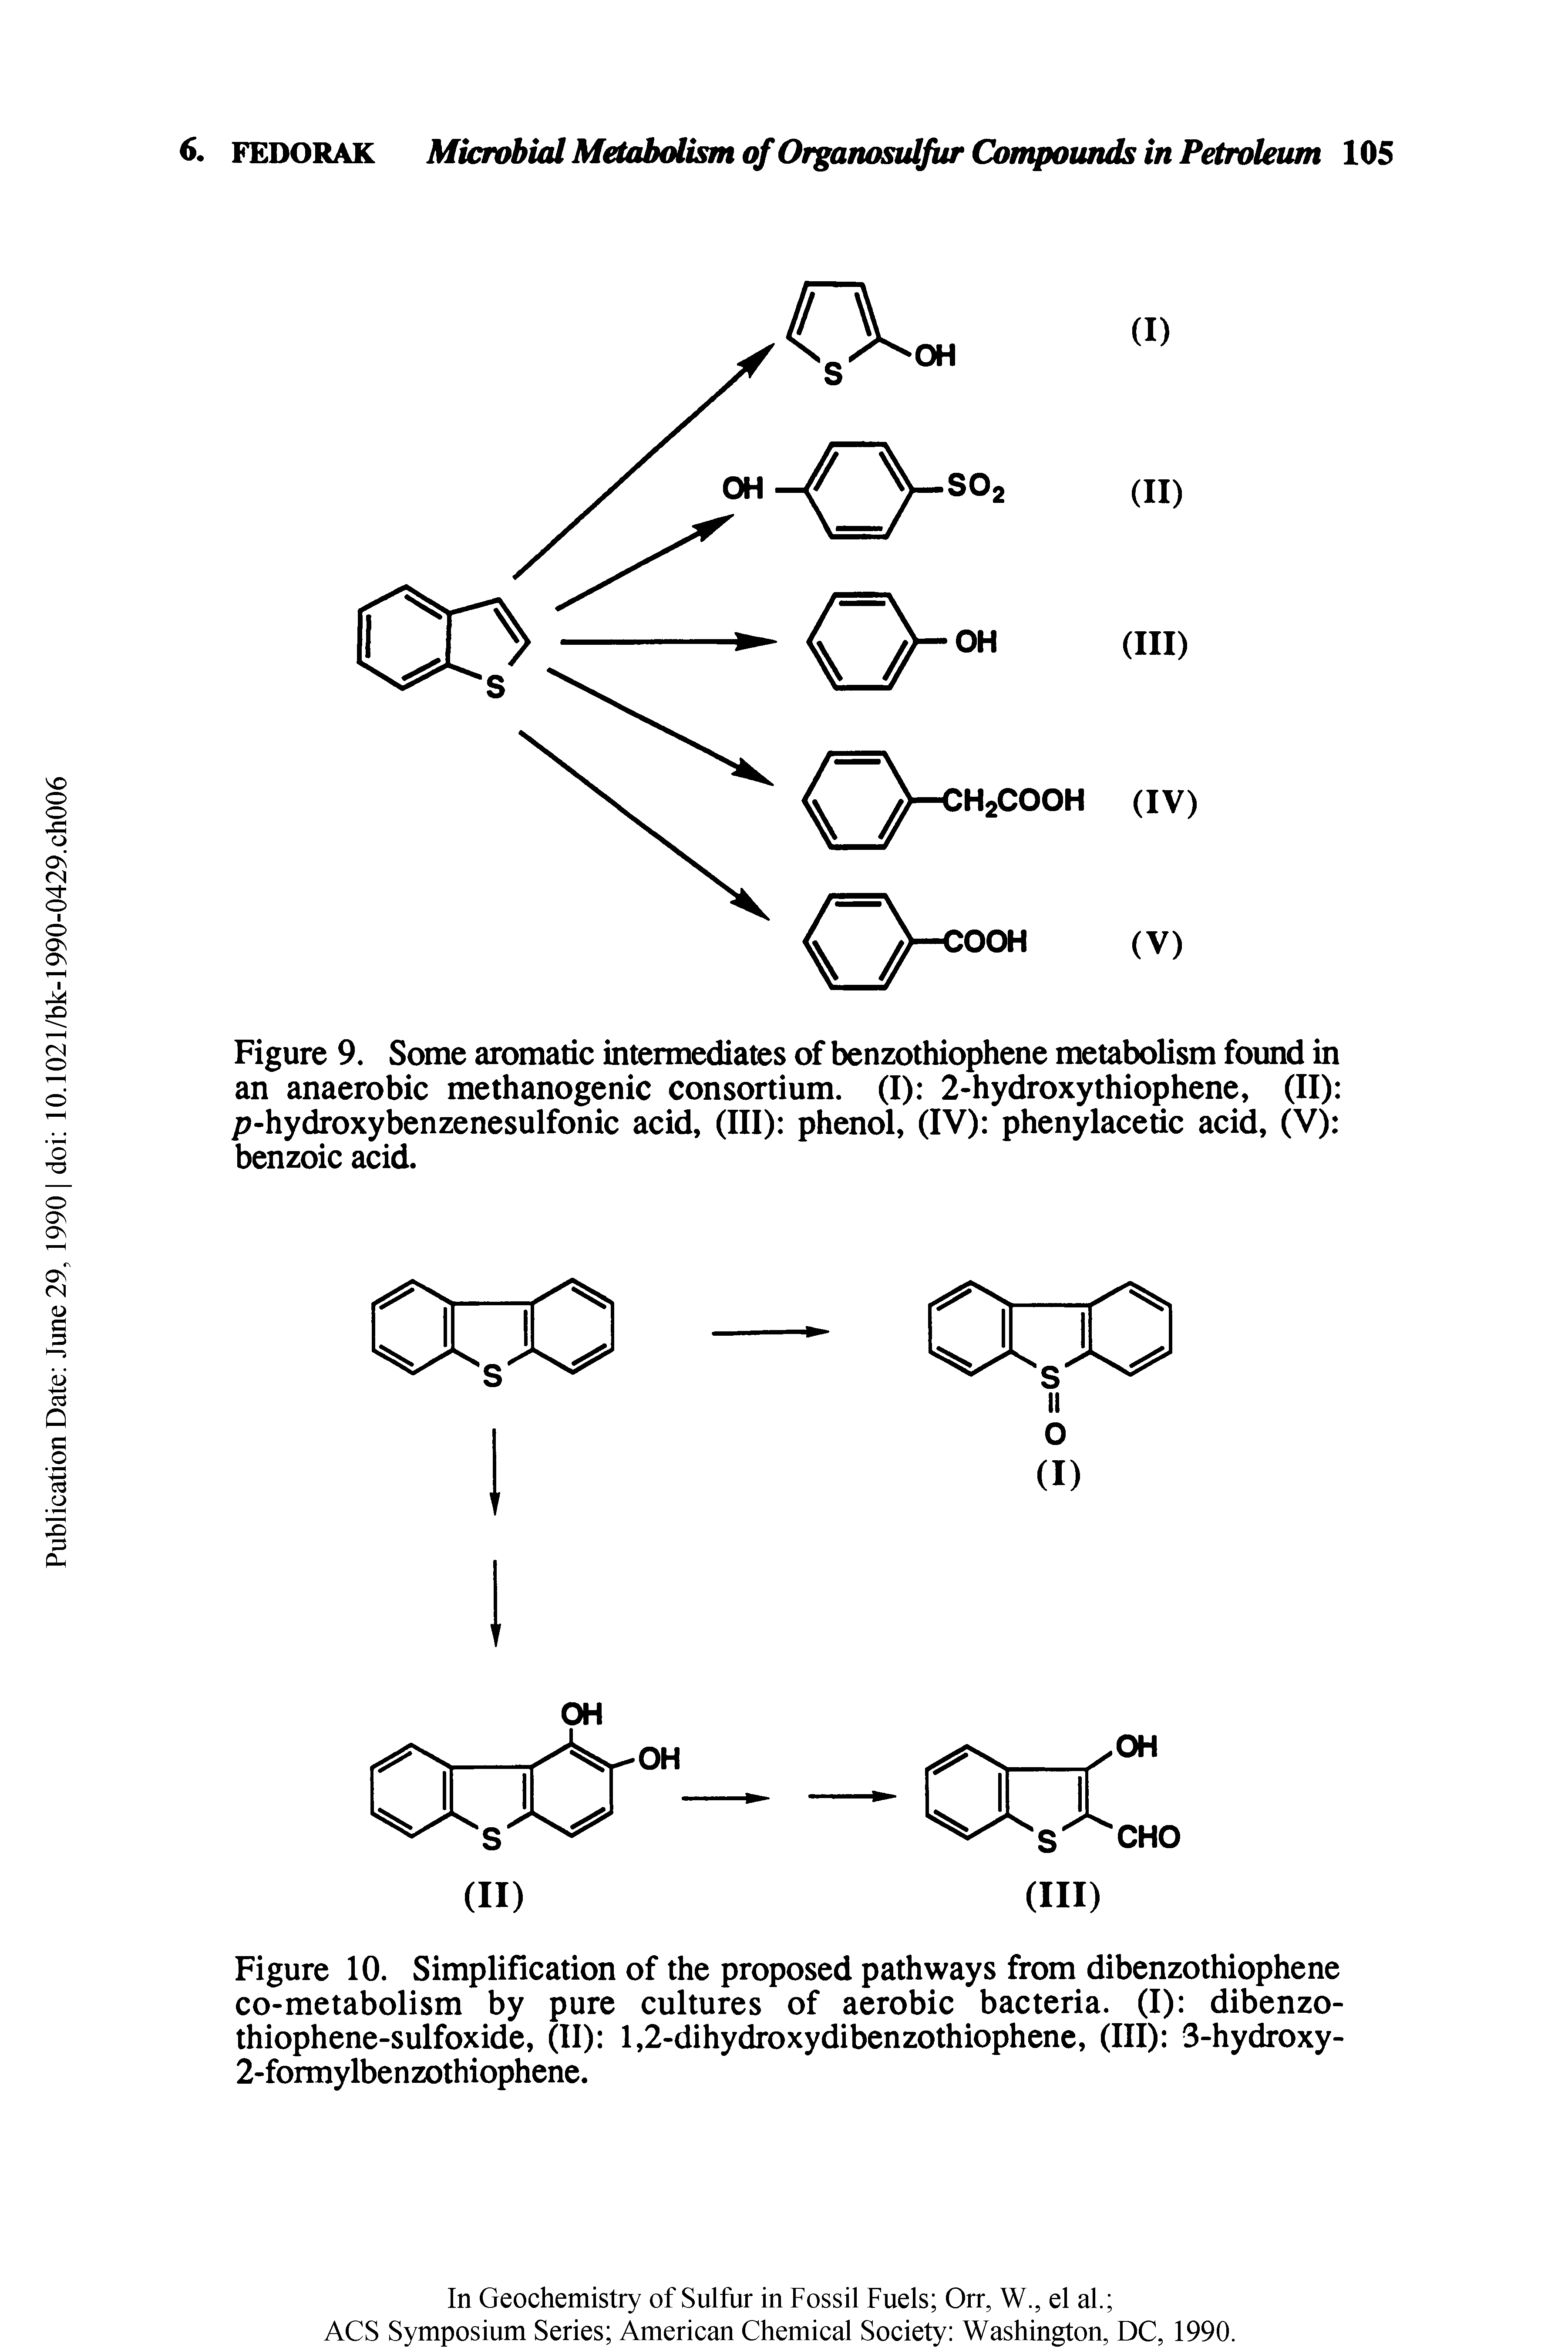 Figure 10. Simplification of the proposed pathways from dibenzothiophene co-metabolism by pure cultures of aerobic bacteria. (I) dibenzo-thiophene-sulfoxide, (II) 1,2-dihydroxydibenzothiophene, (III) 3-hydroxy-2-formylbenzothiophene.